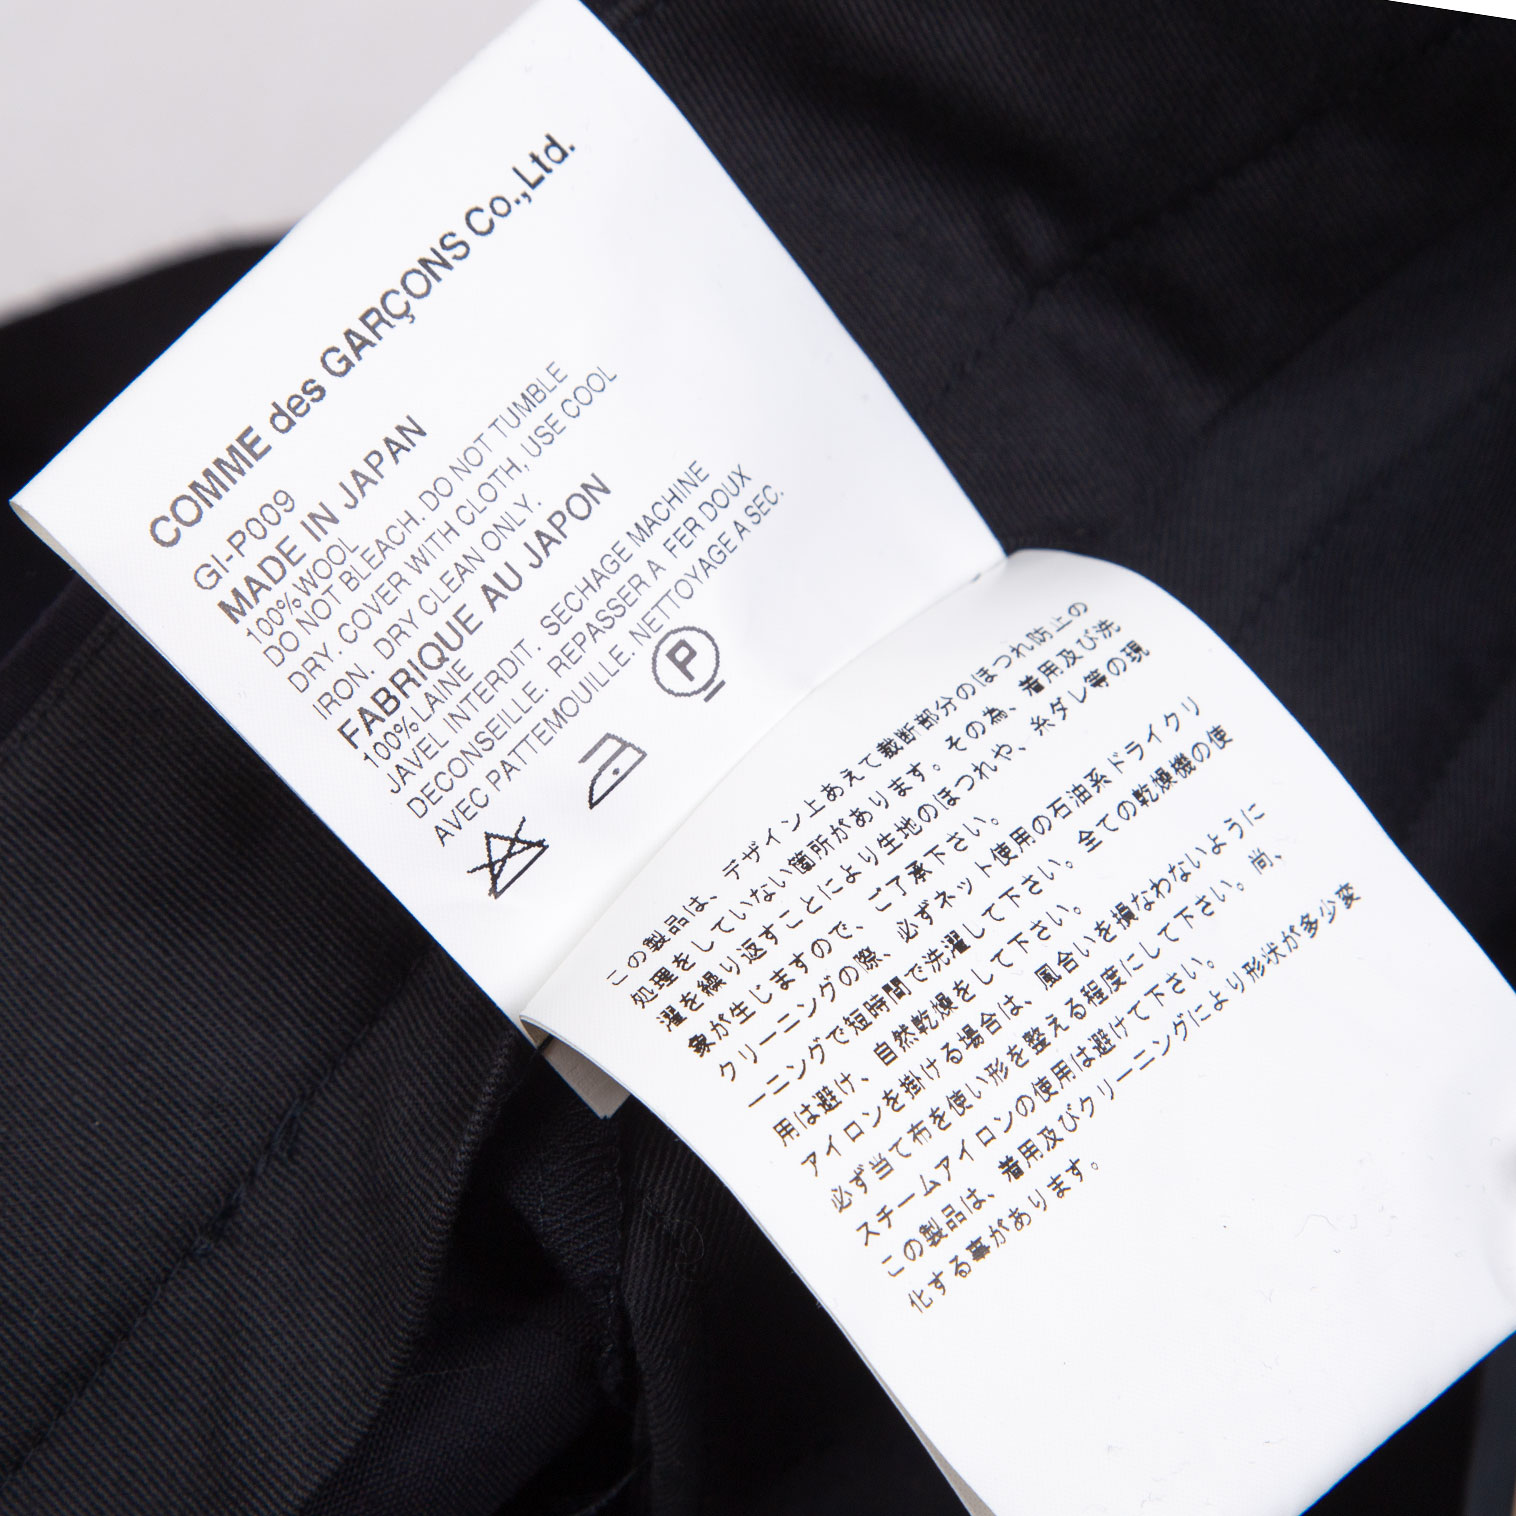 COMME des GARCONS Braid Design Wool Pants (Trousers) Navy M | PLAYFUL